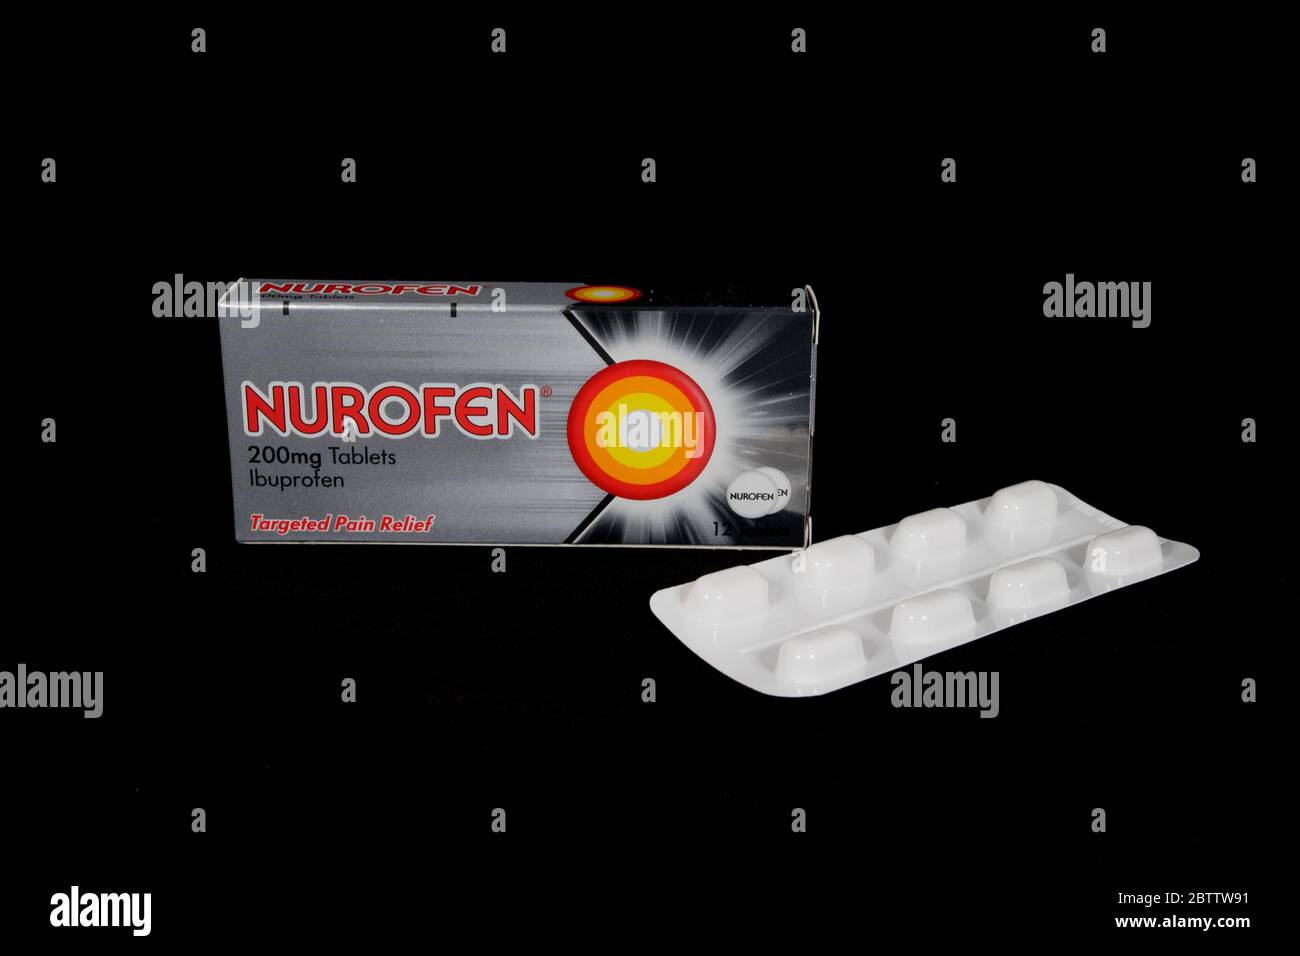 Packet of Nurofen 200mg Ibuprofen Caplets against a black background. Stock Photo